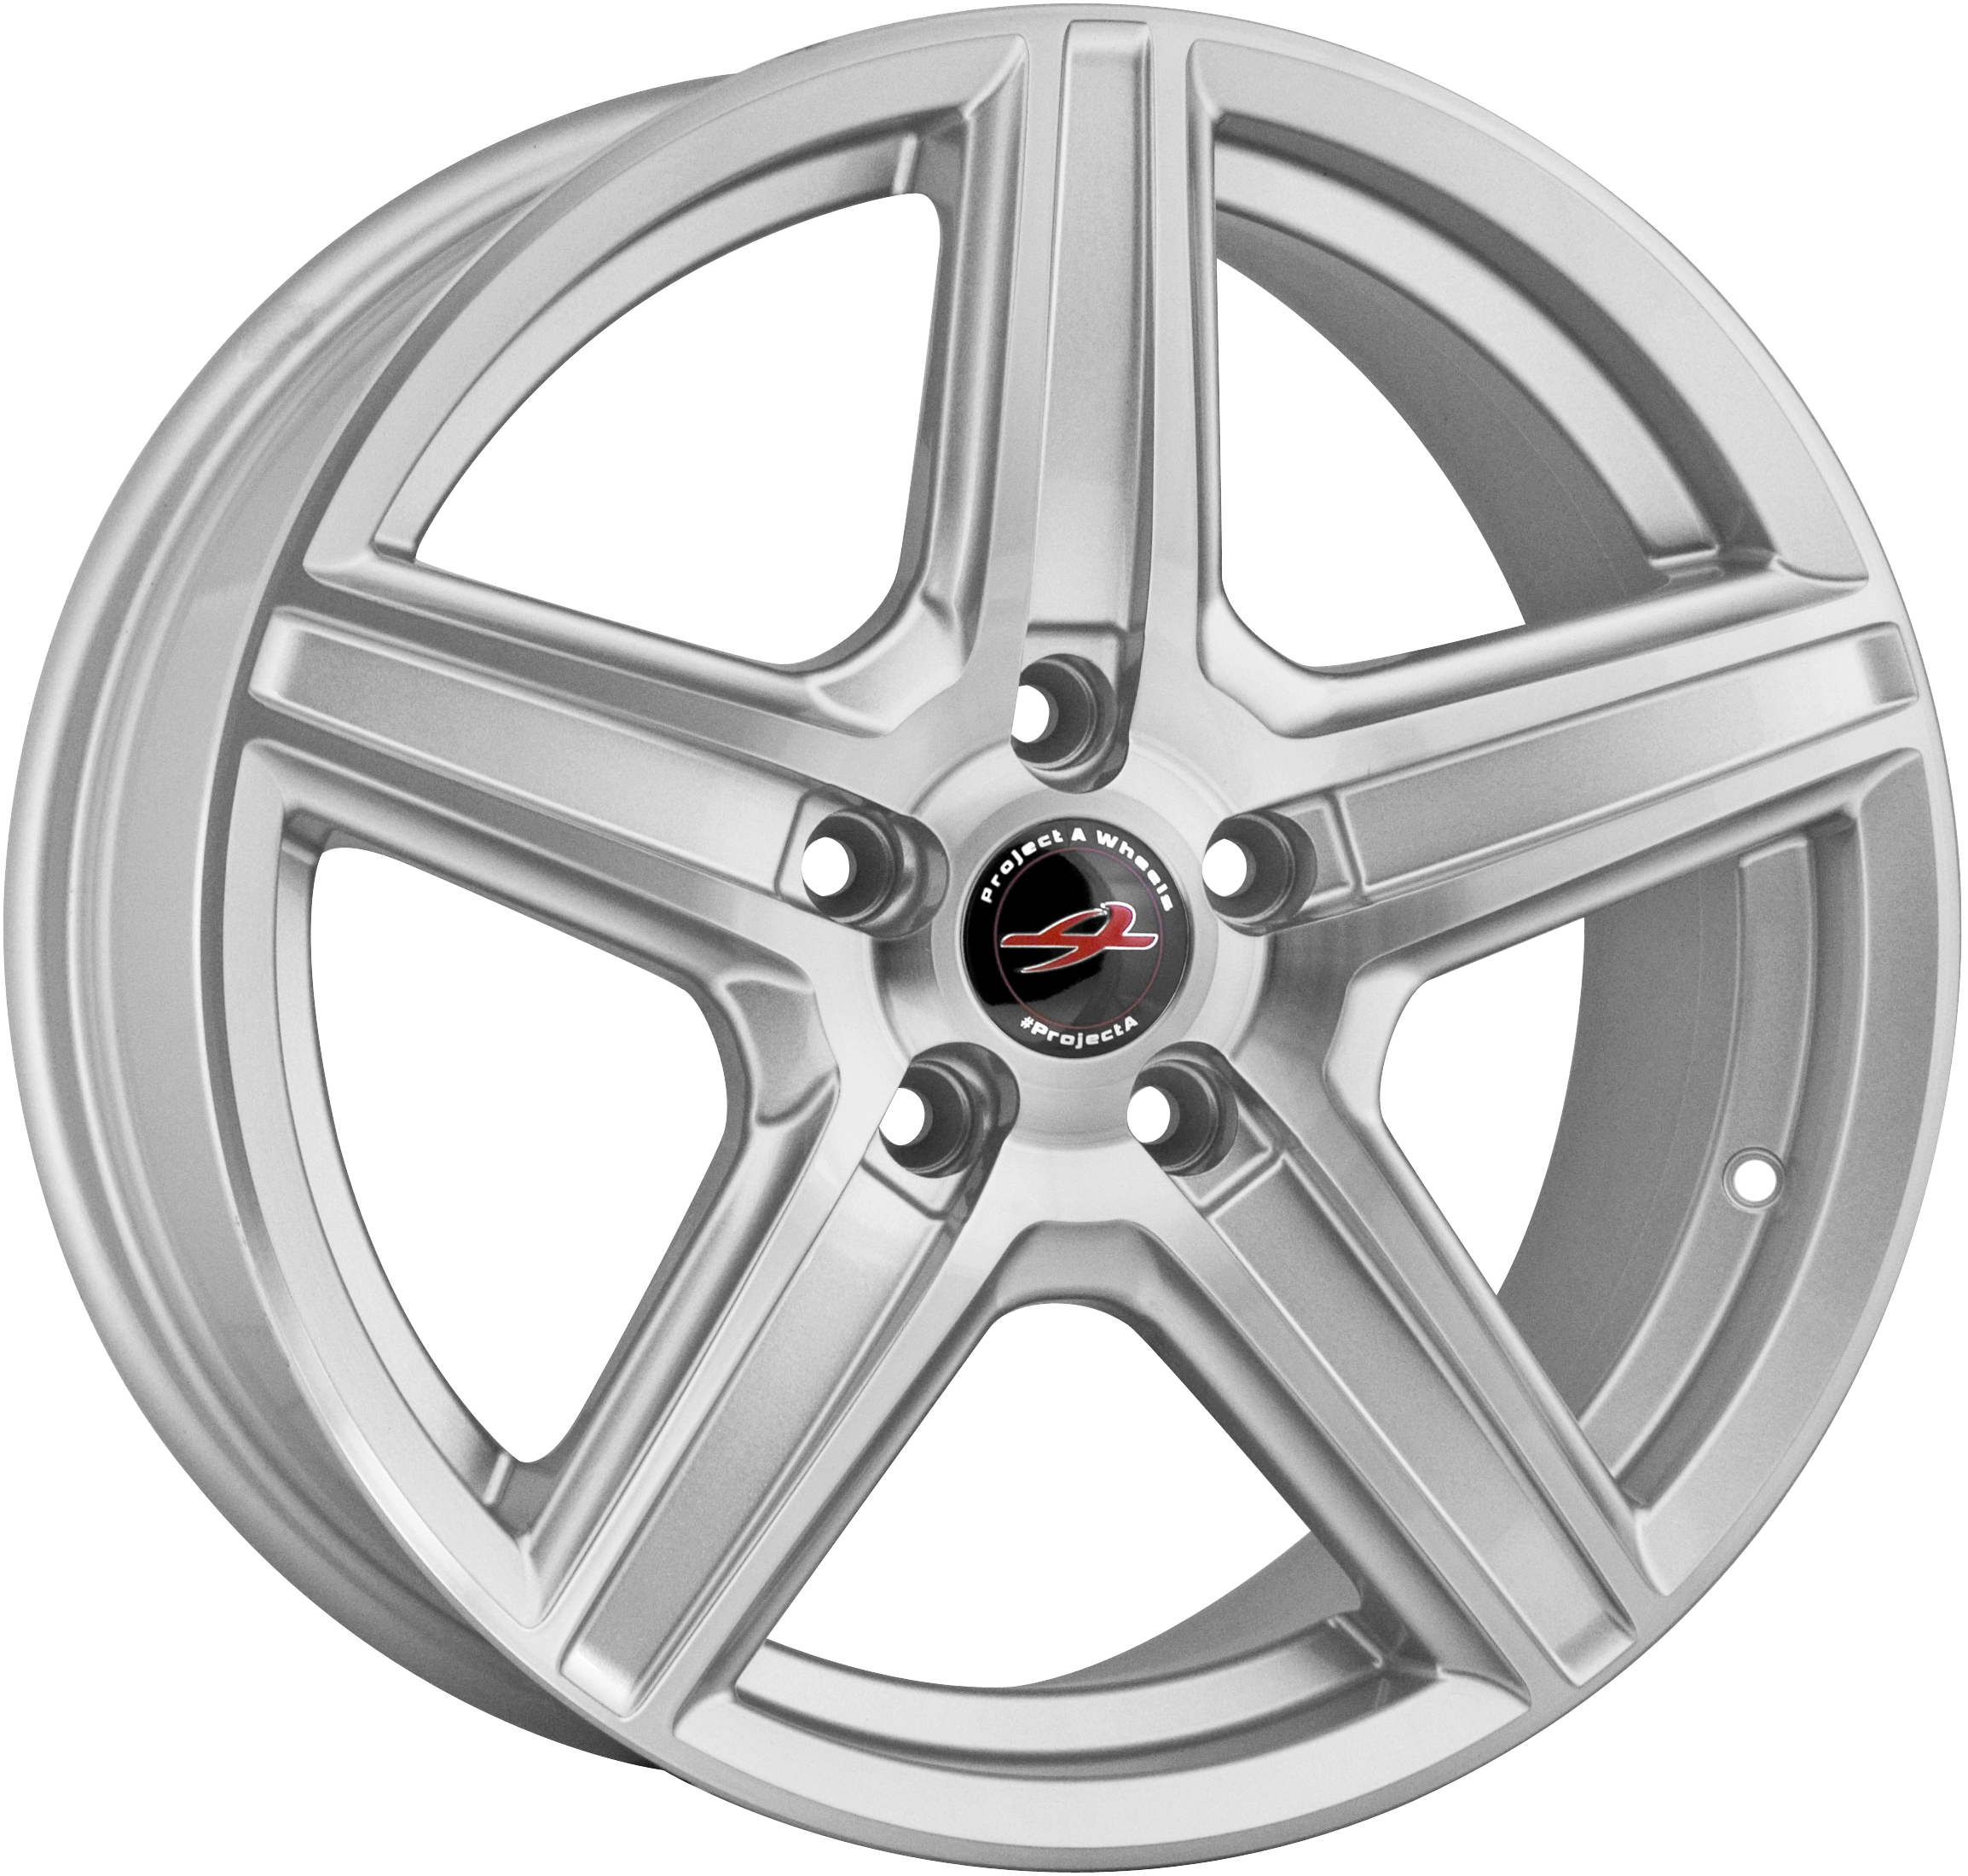 Clearance Sale Zeta5 Alloy Wheels